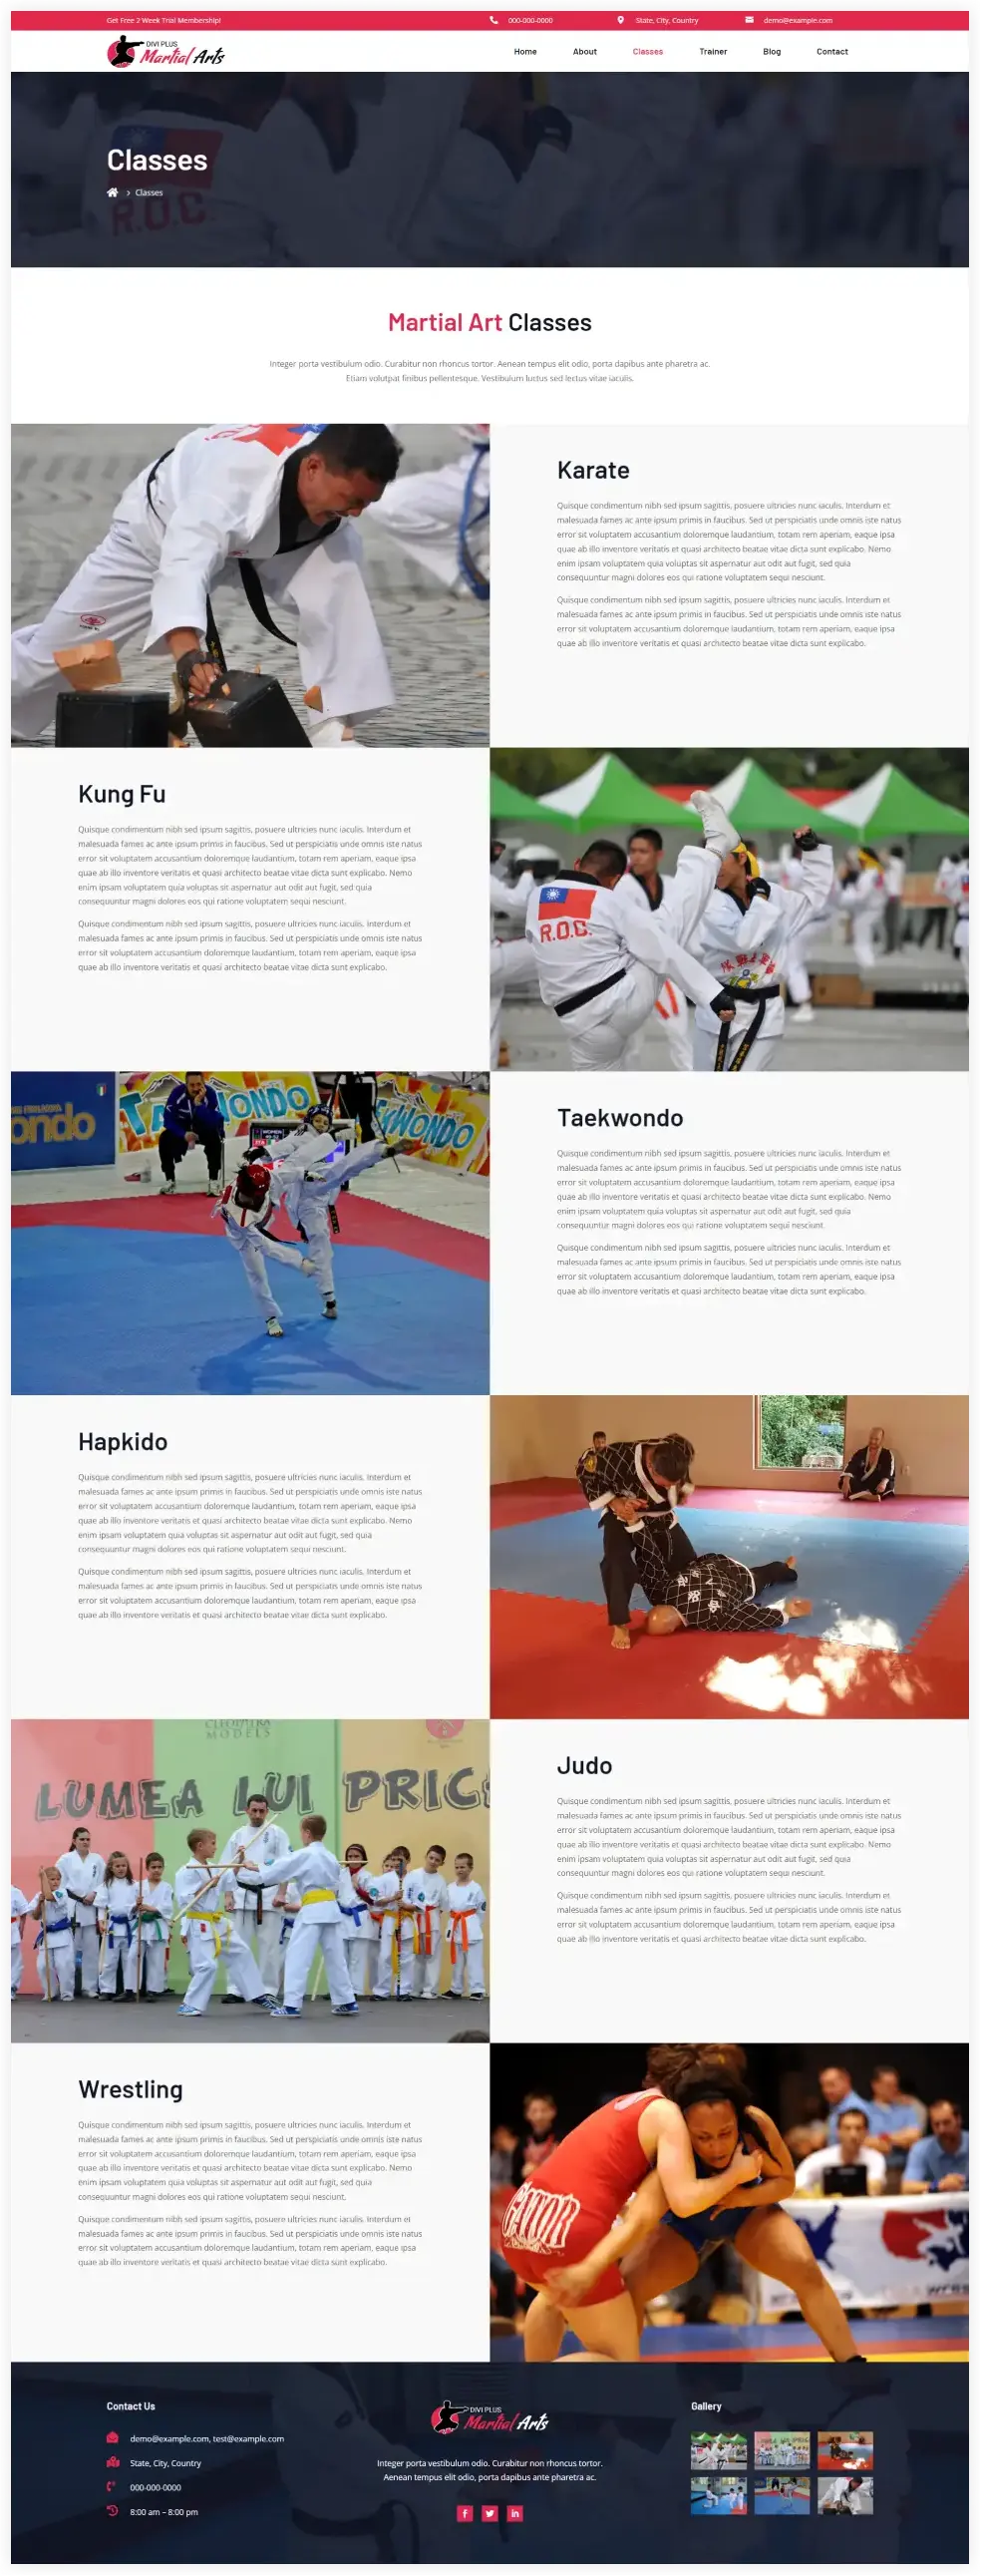 Martial art classes layout